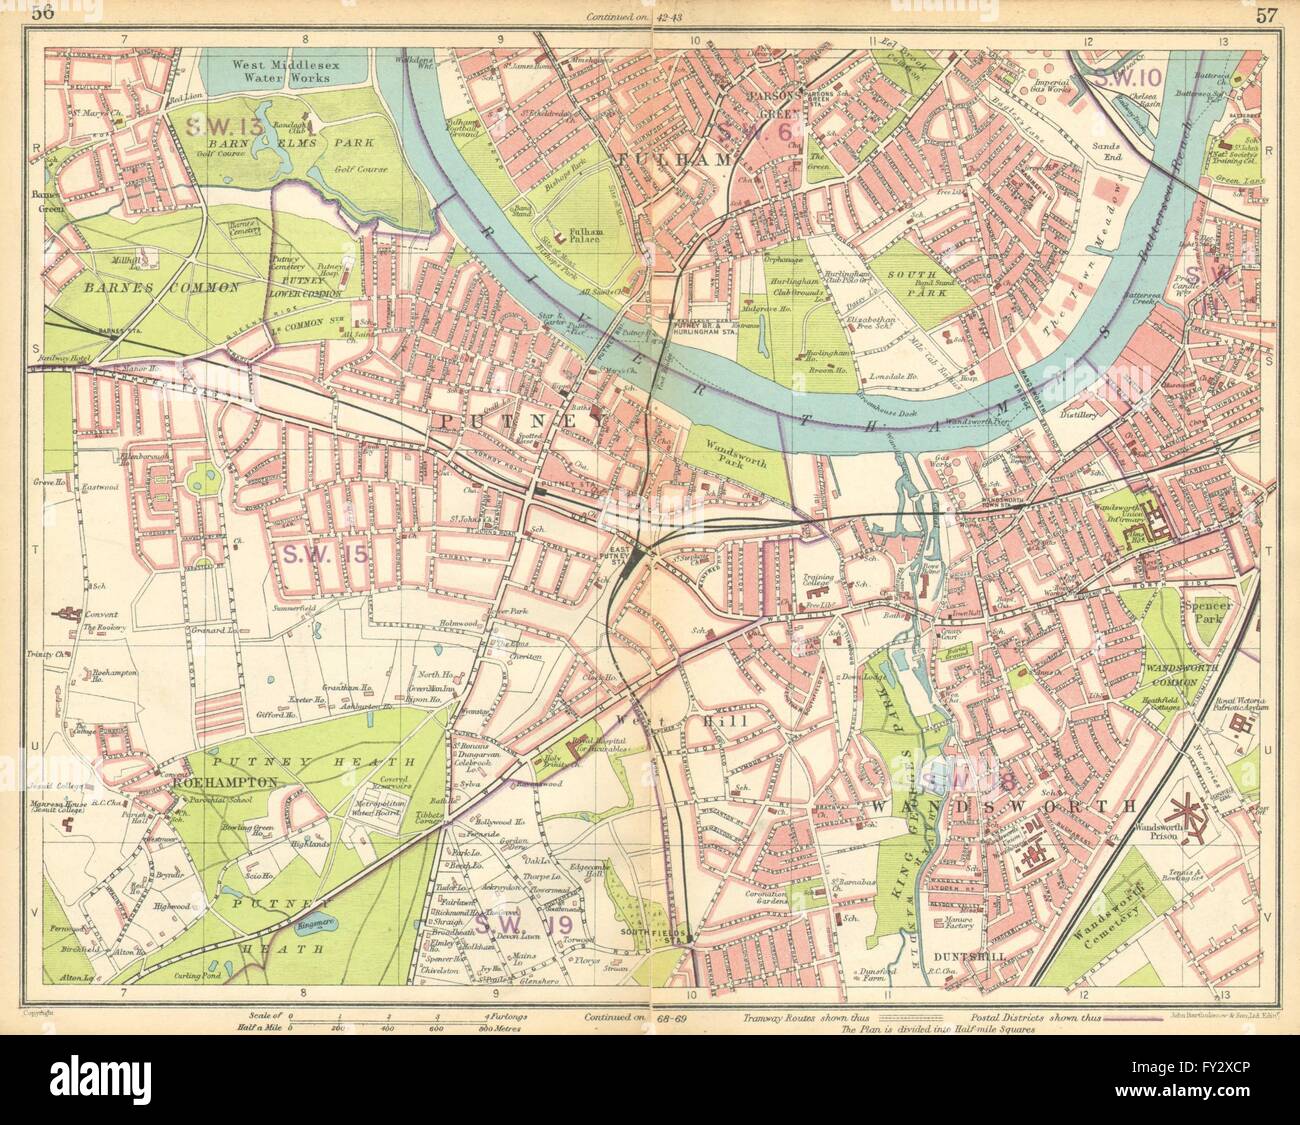 LONDON SW: Putney Wandsworth Fulham Barnes Parson's Green Roehampton, 1925 map Stock Photo